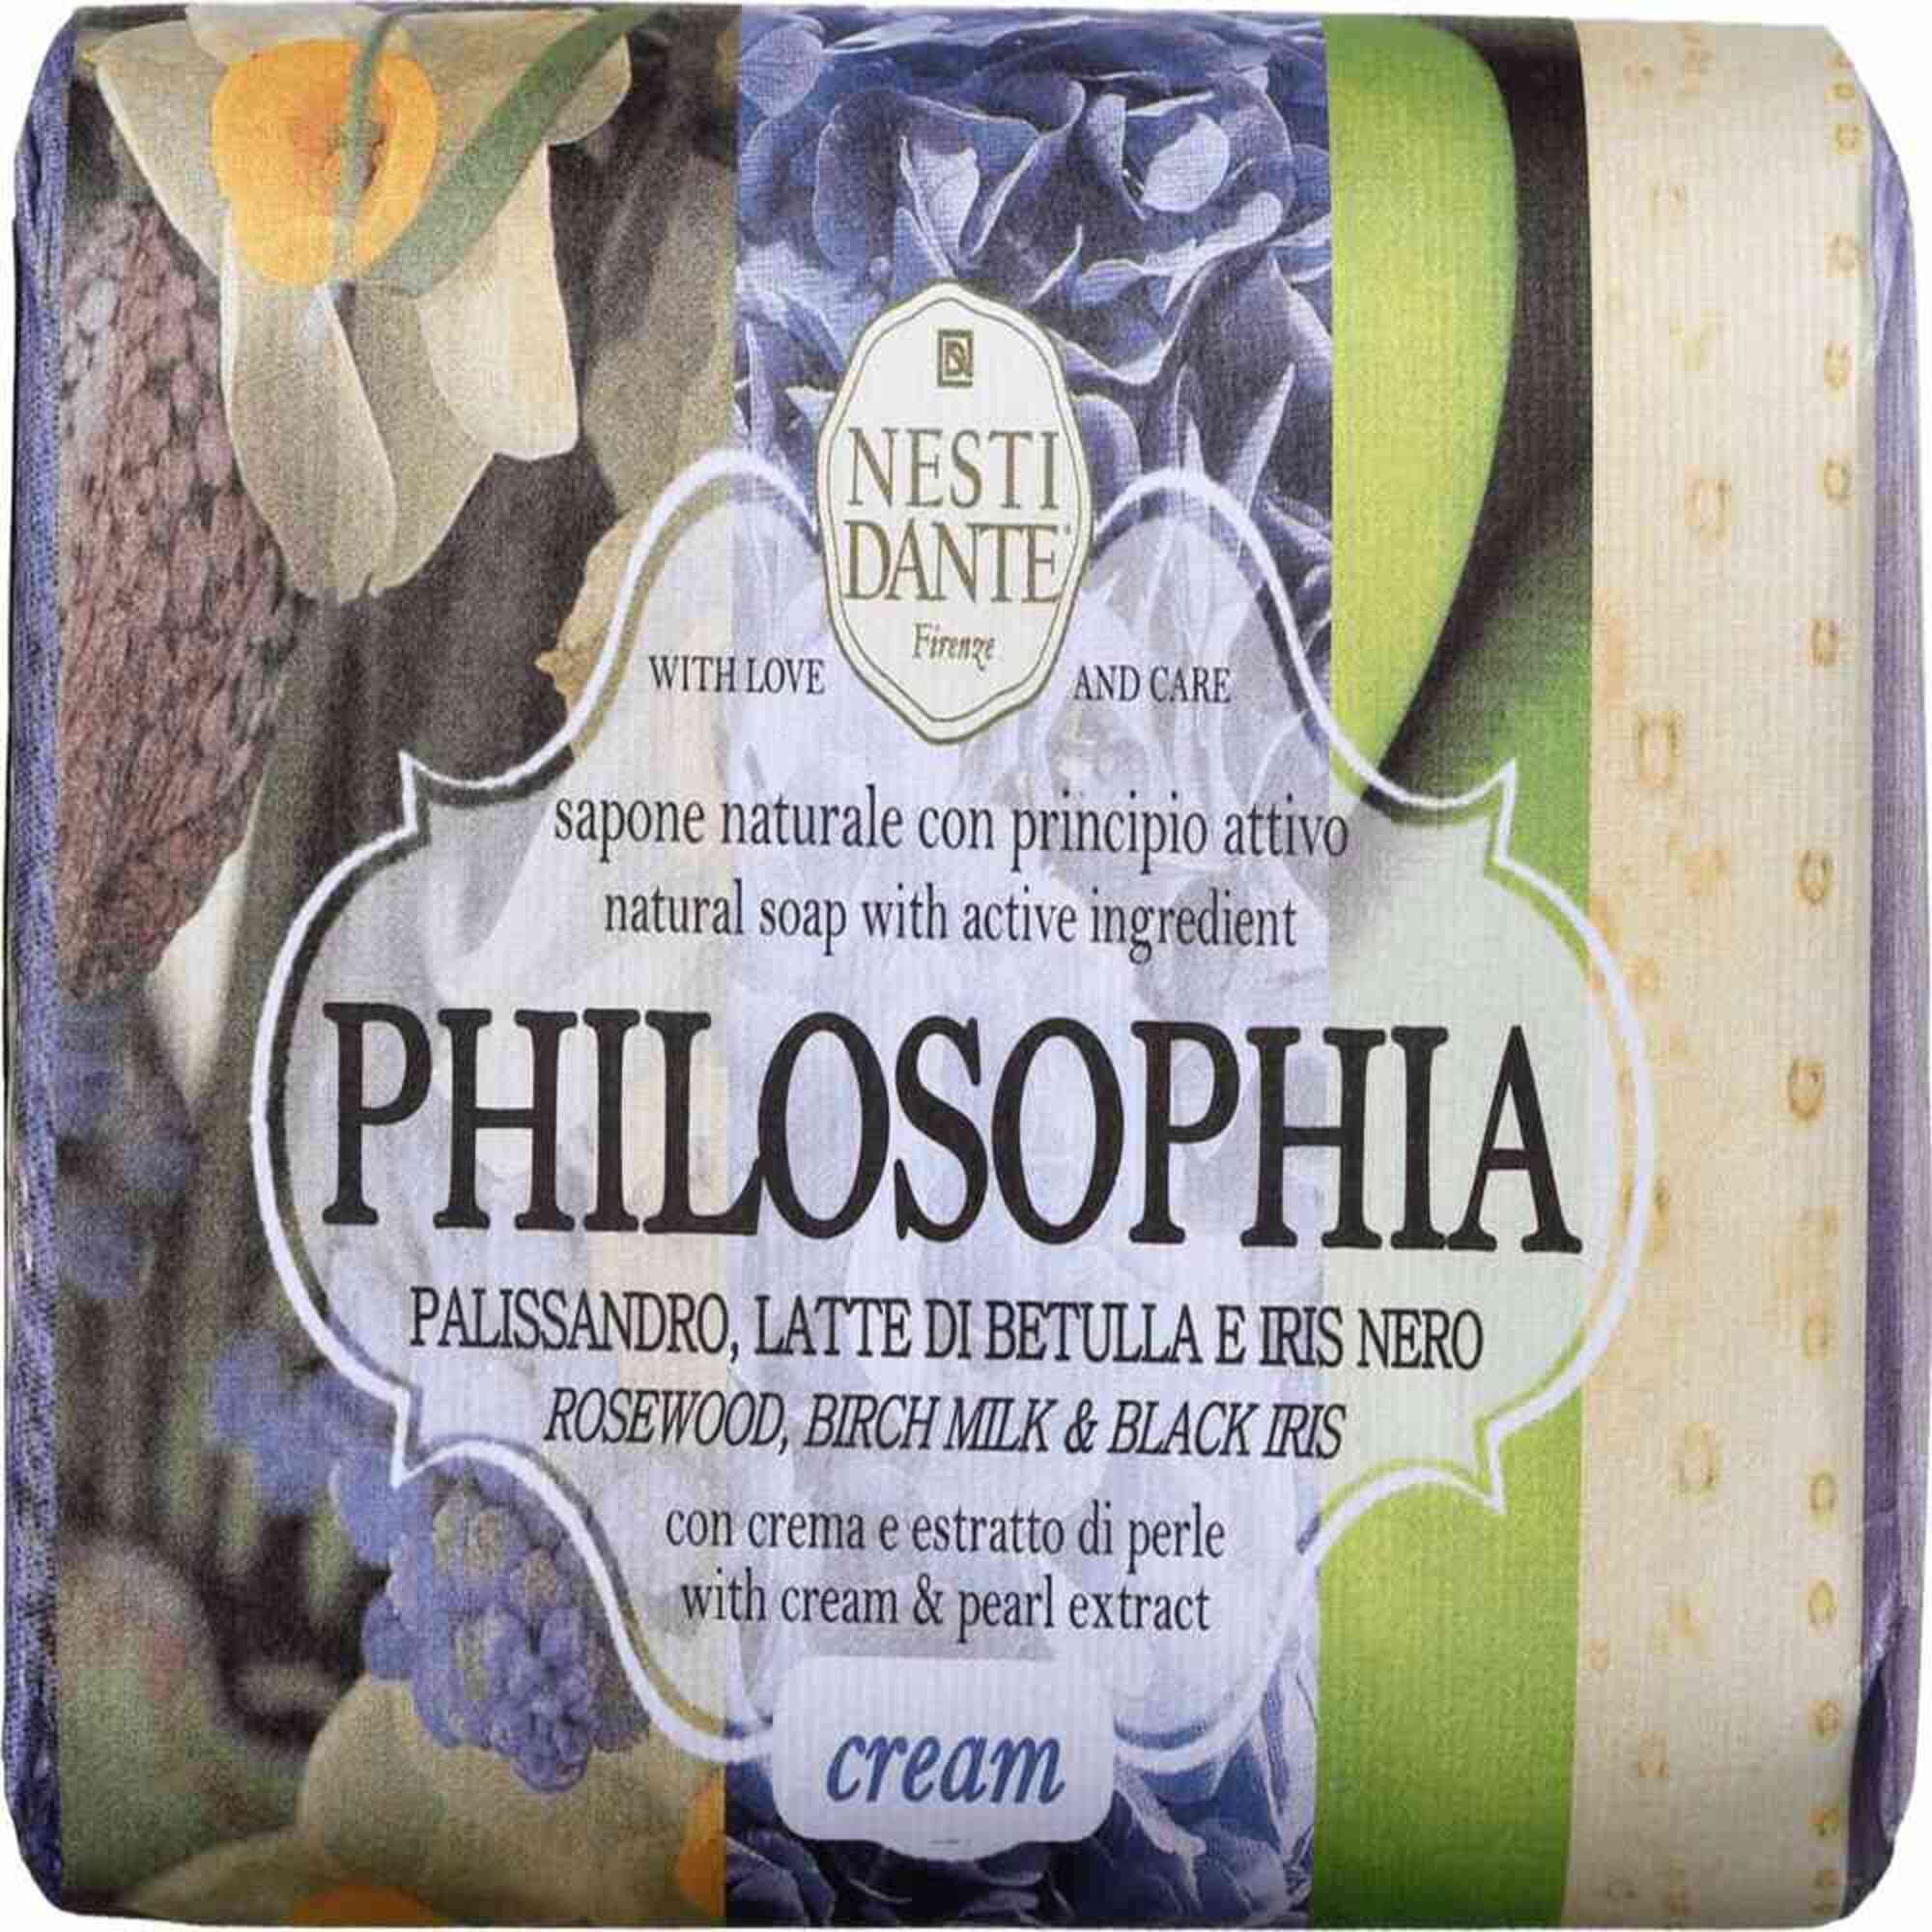 Sabonete Philosophia Cream And Pearls 250g Nesti Dante